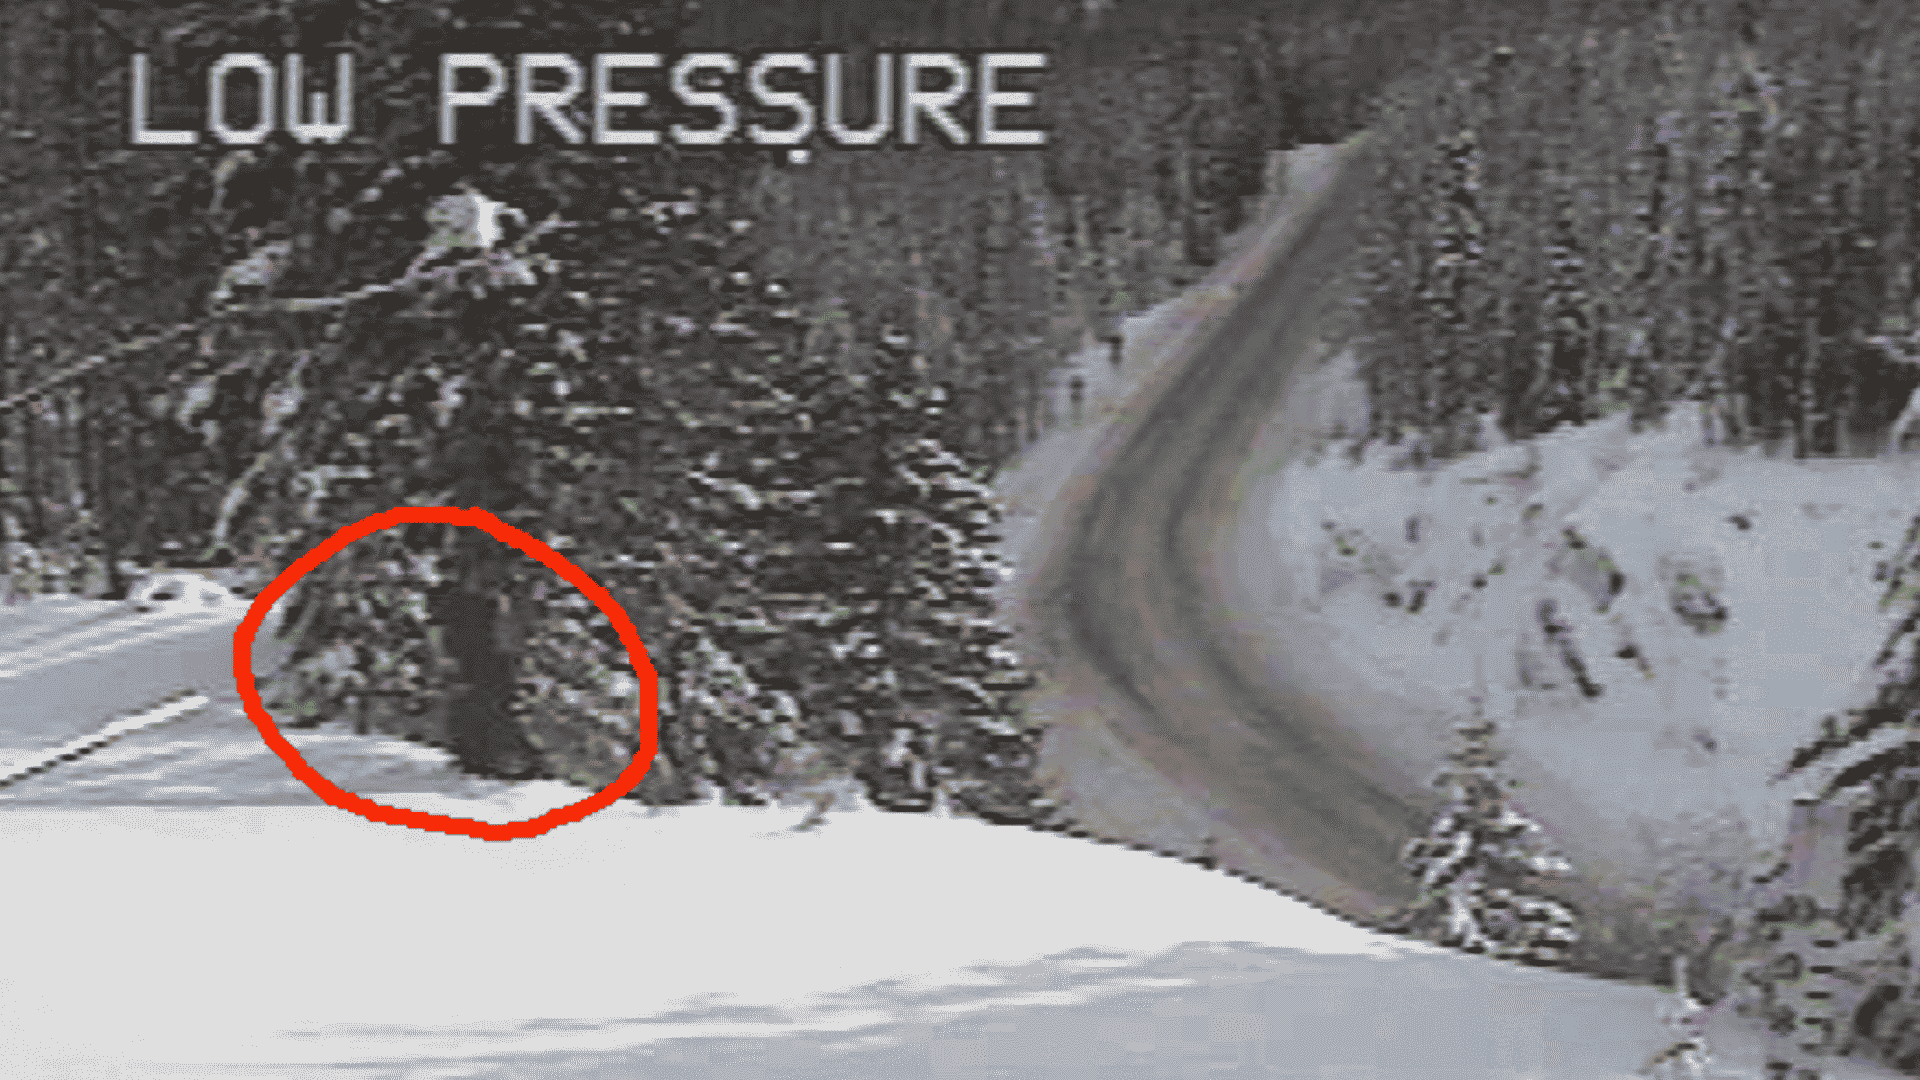 Was Bigfoot spotted on Washington traffic camera?